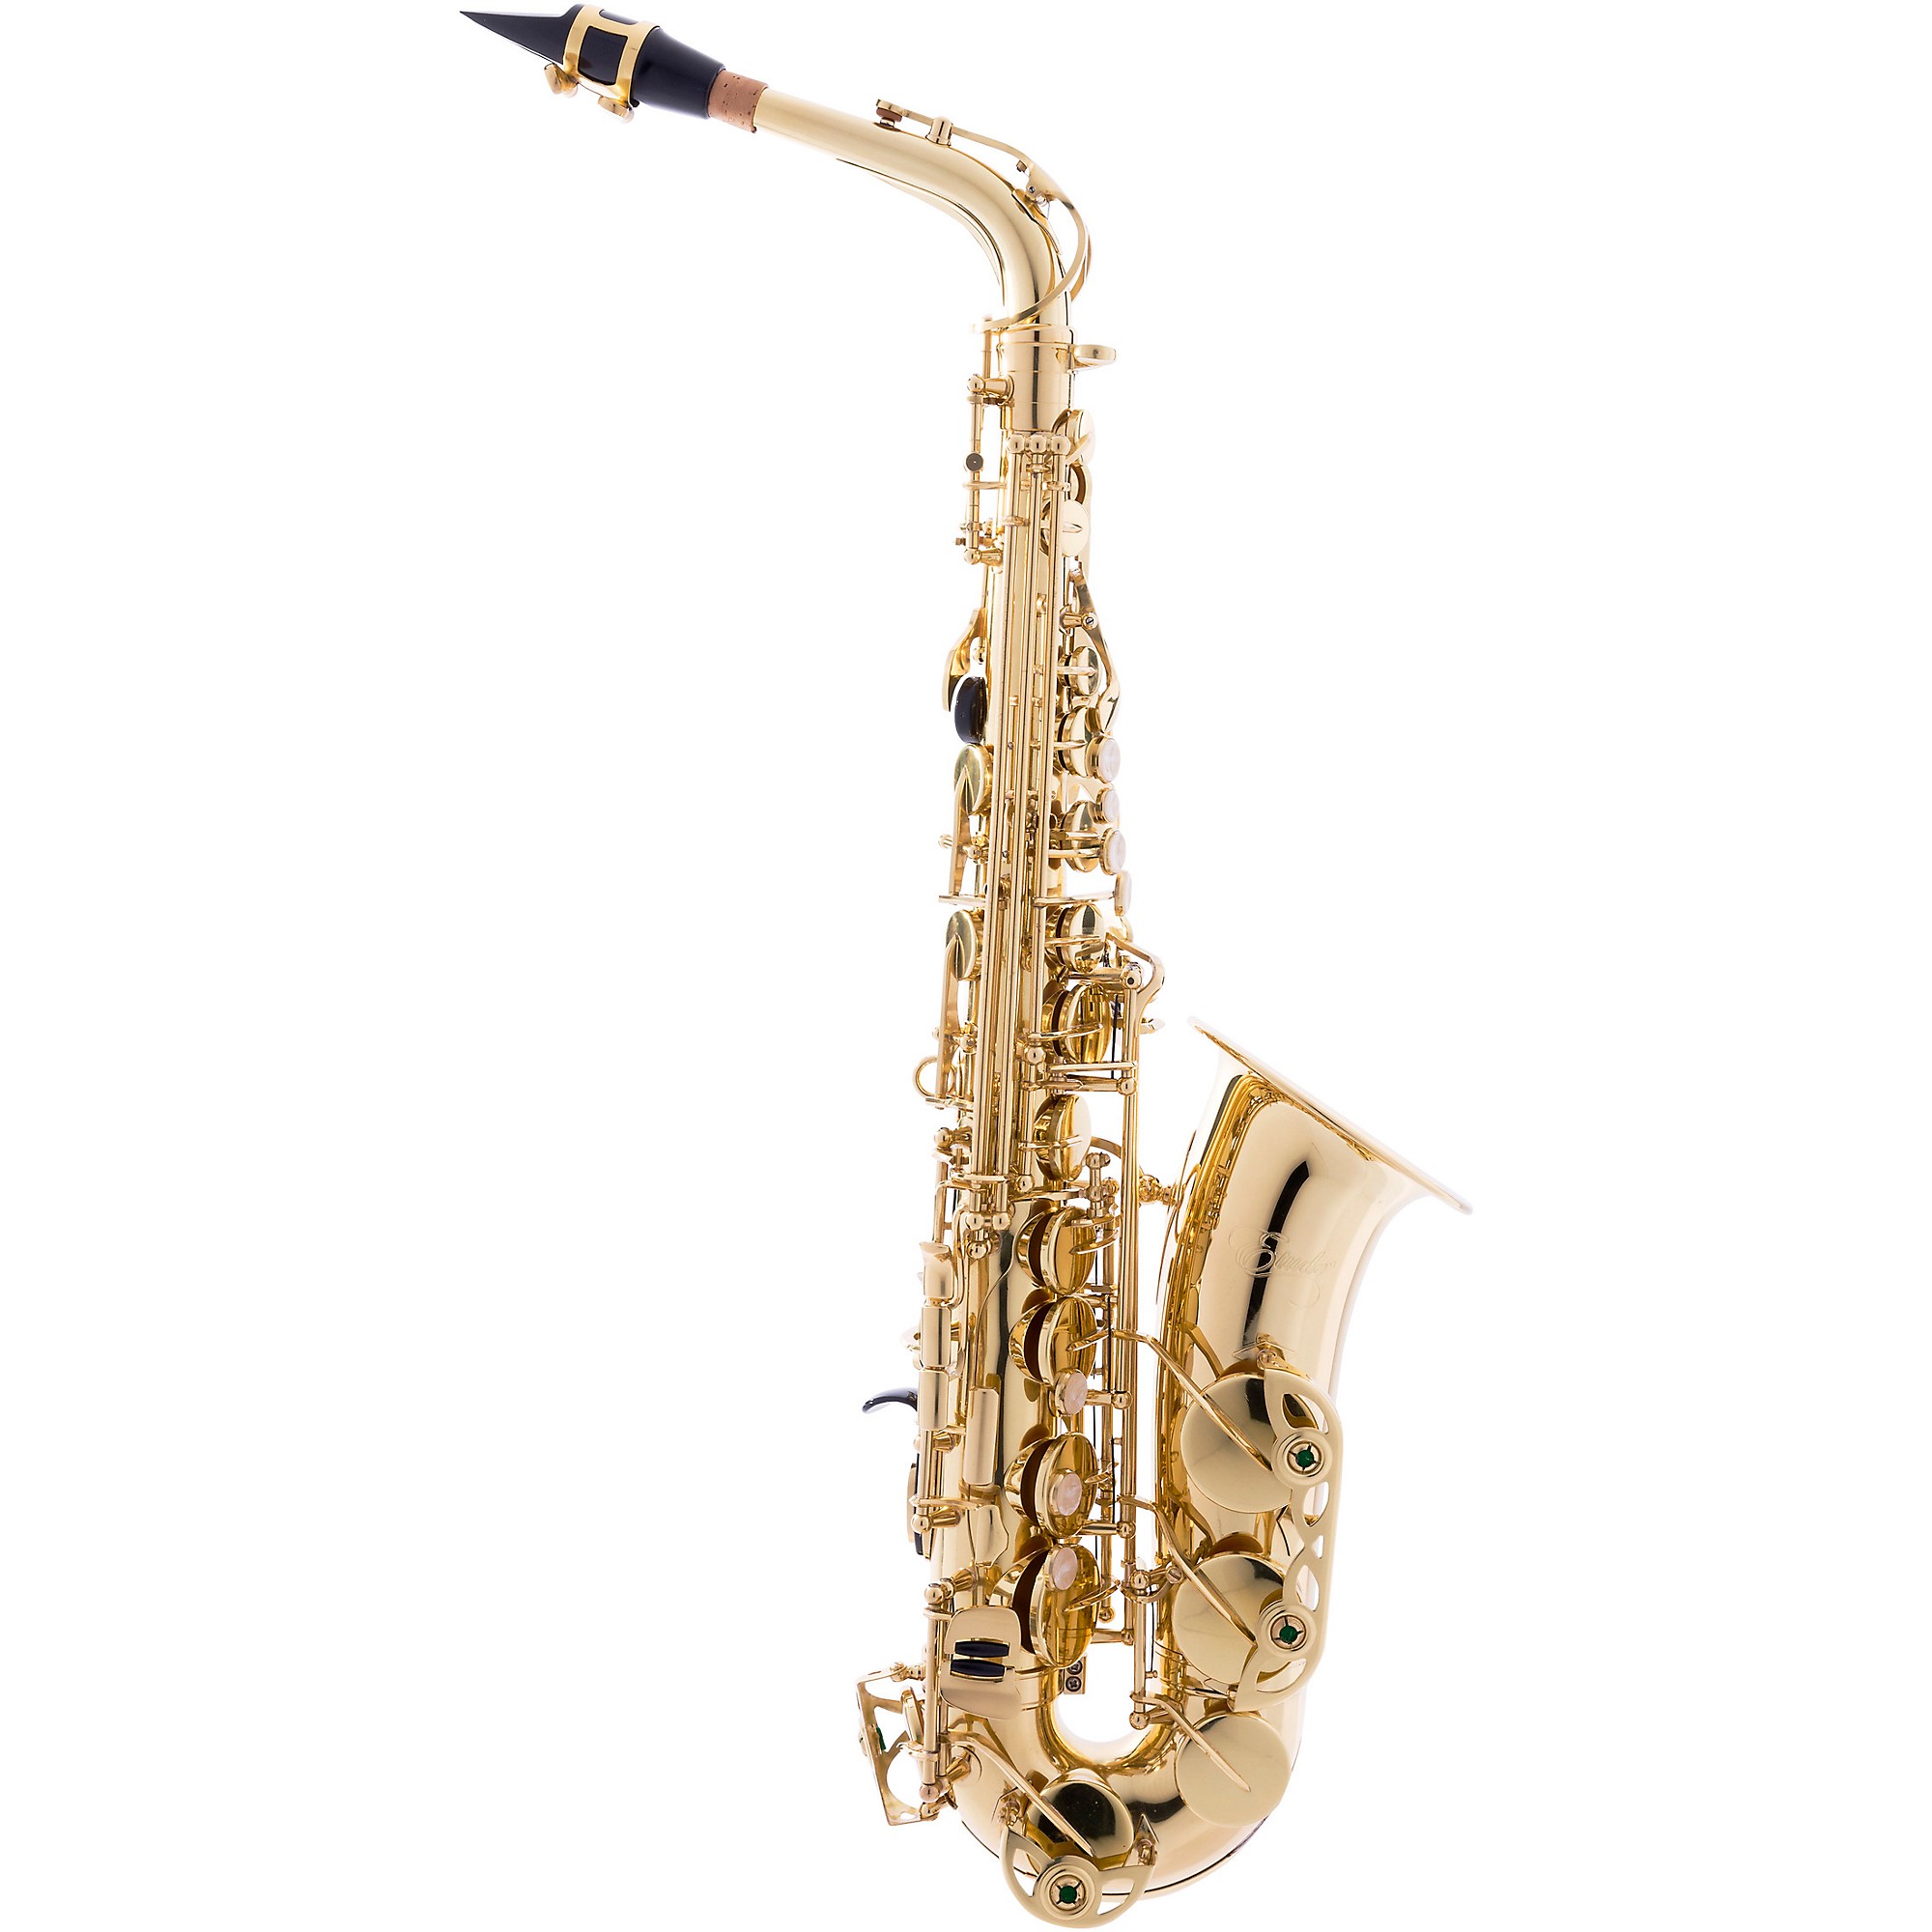 Etude ETS-200 Student Series Tenor Saxophone